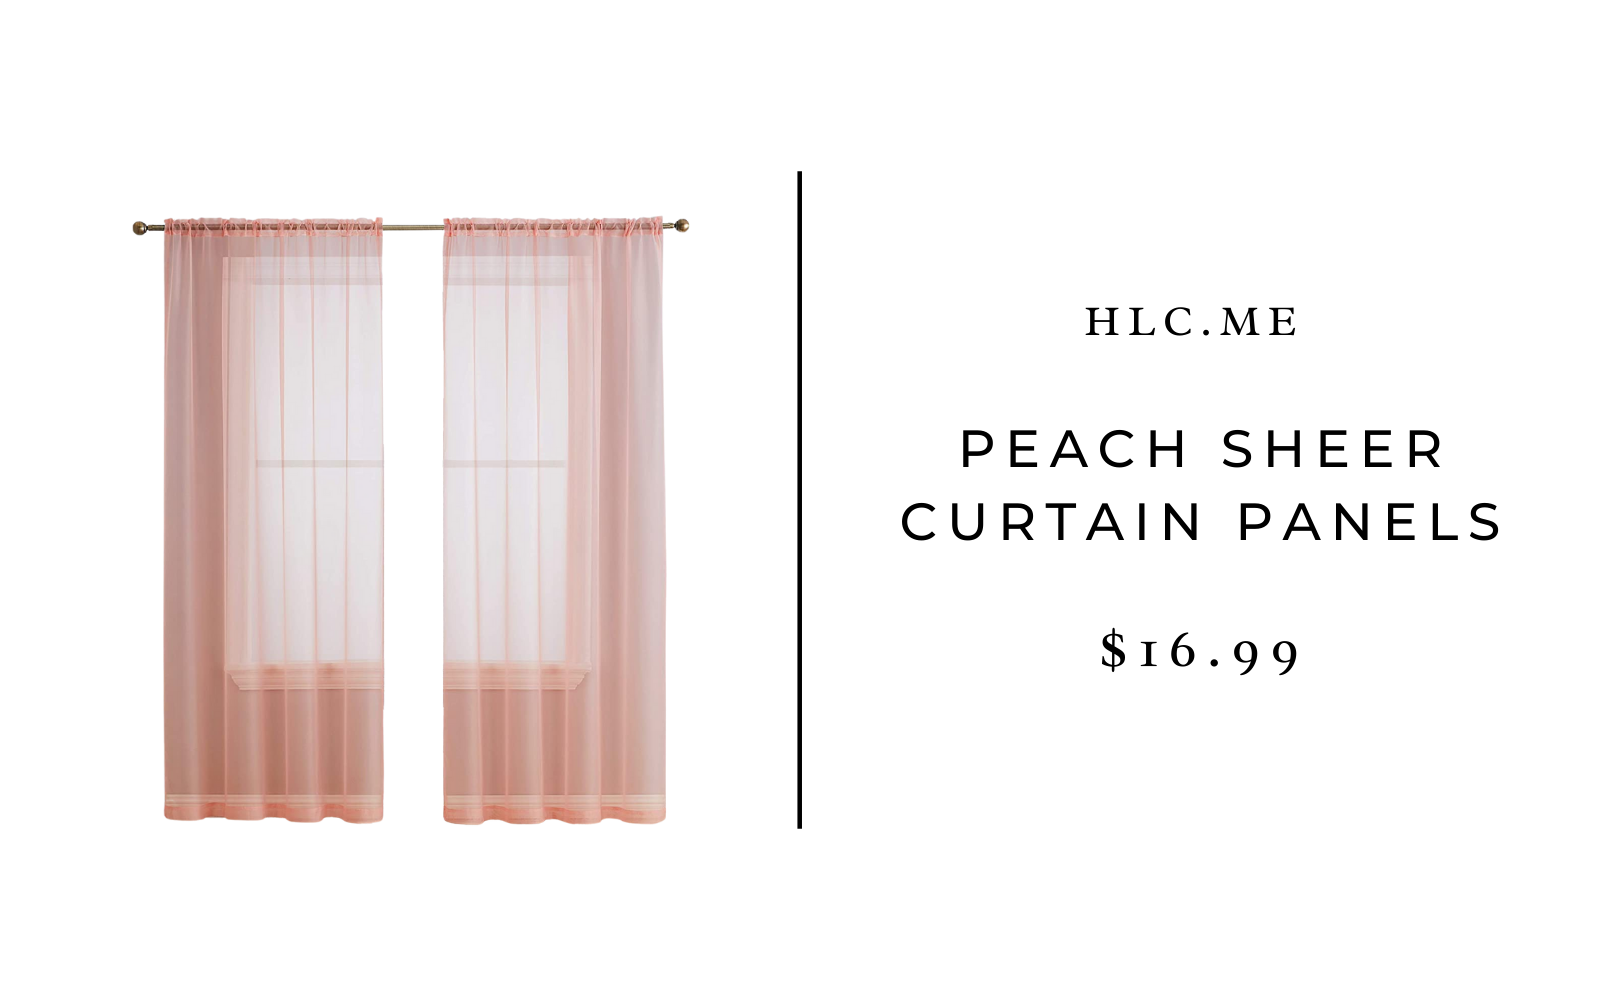 hlc.me peach sheer curtains